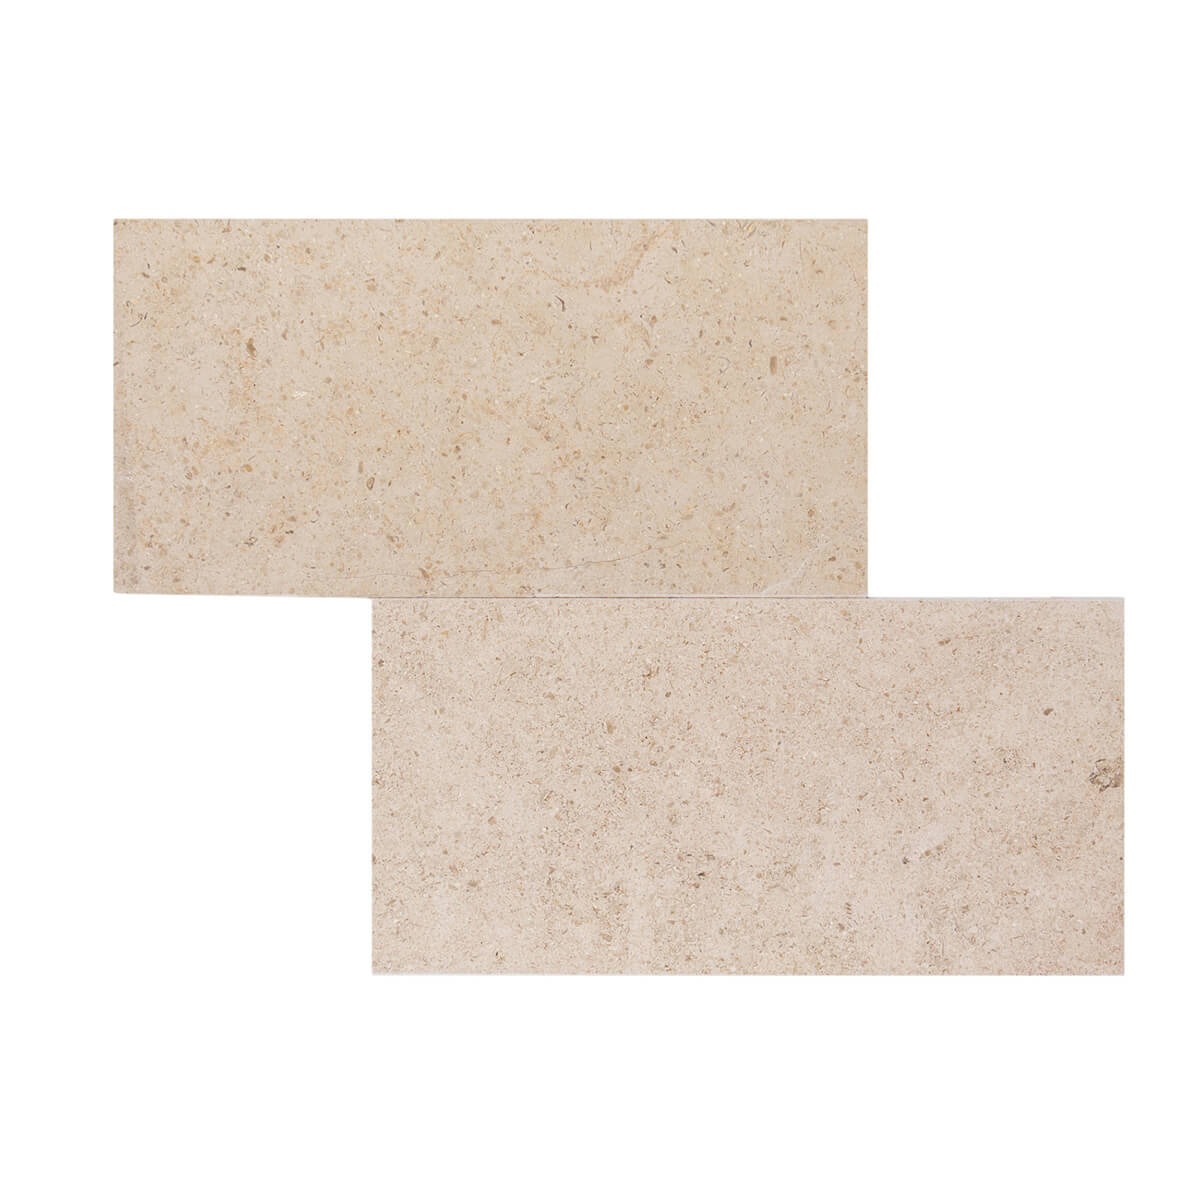 haussmann fonjone gascogne beige limestone rectangle natural stone field tile 6x12 honed